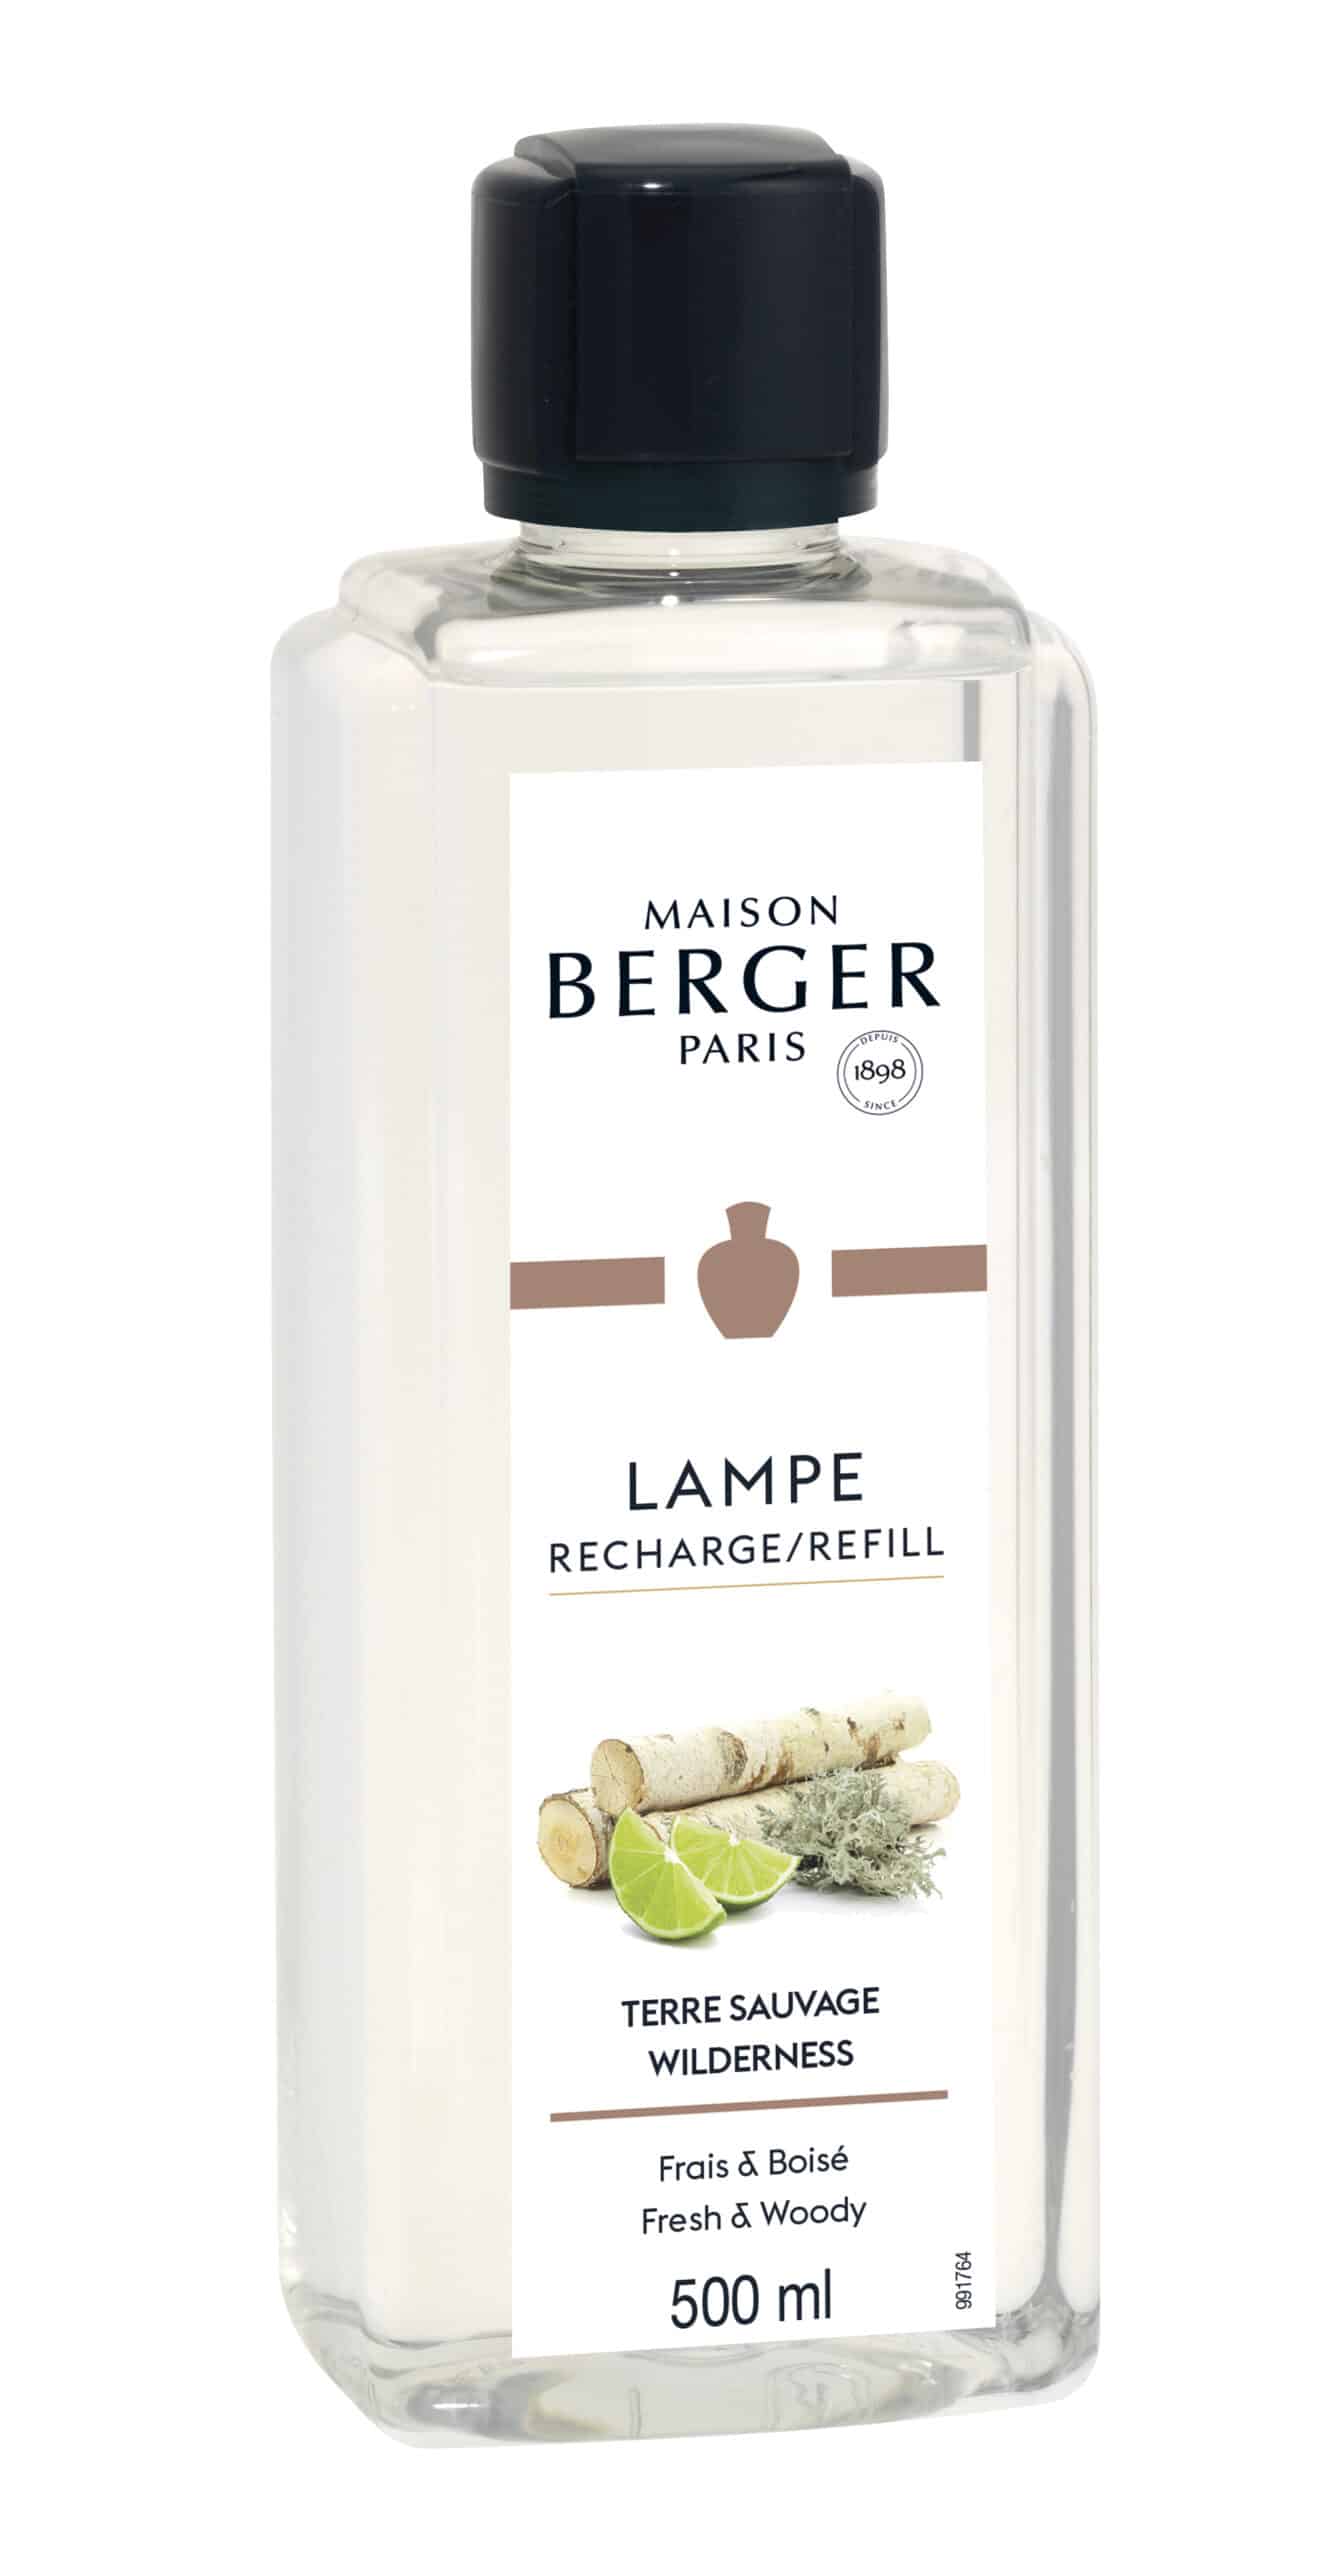 Maison Berger Paris - parfum Wilderness - 500 ml.